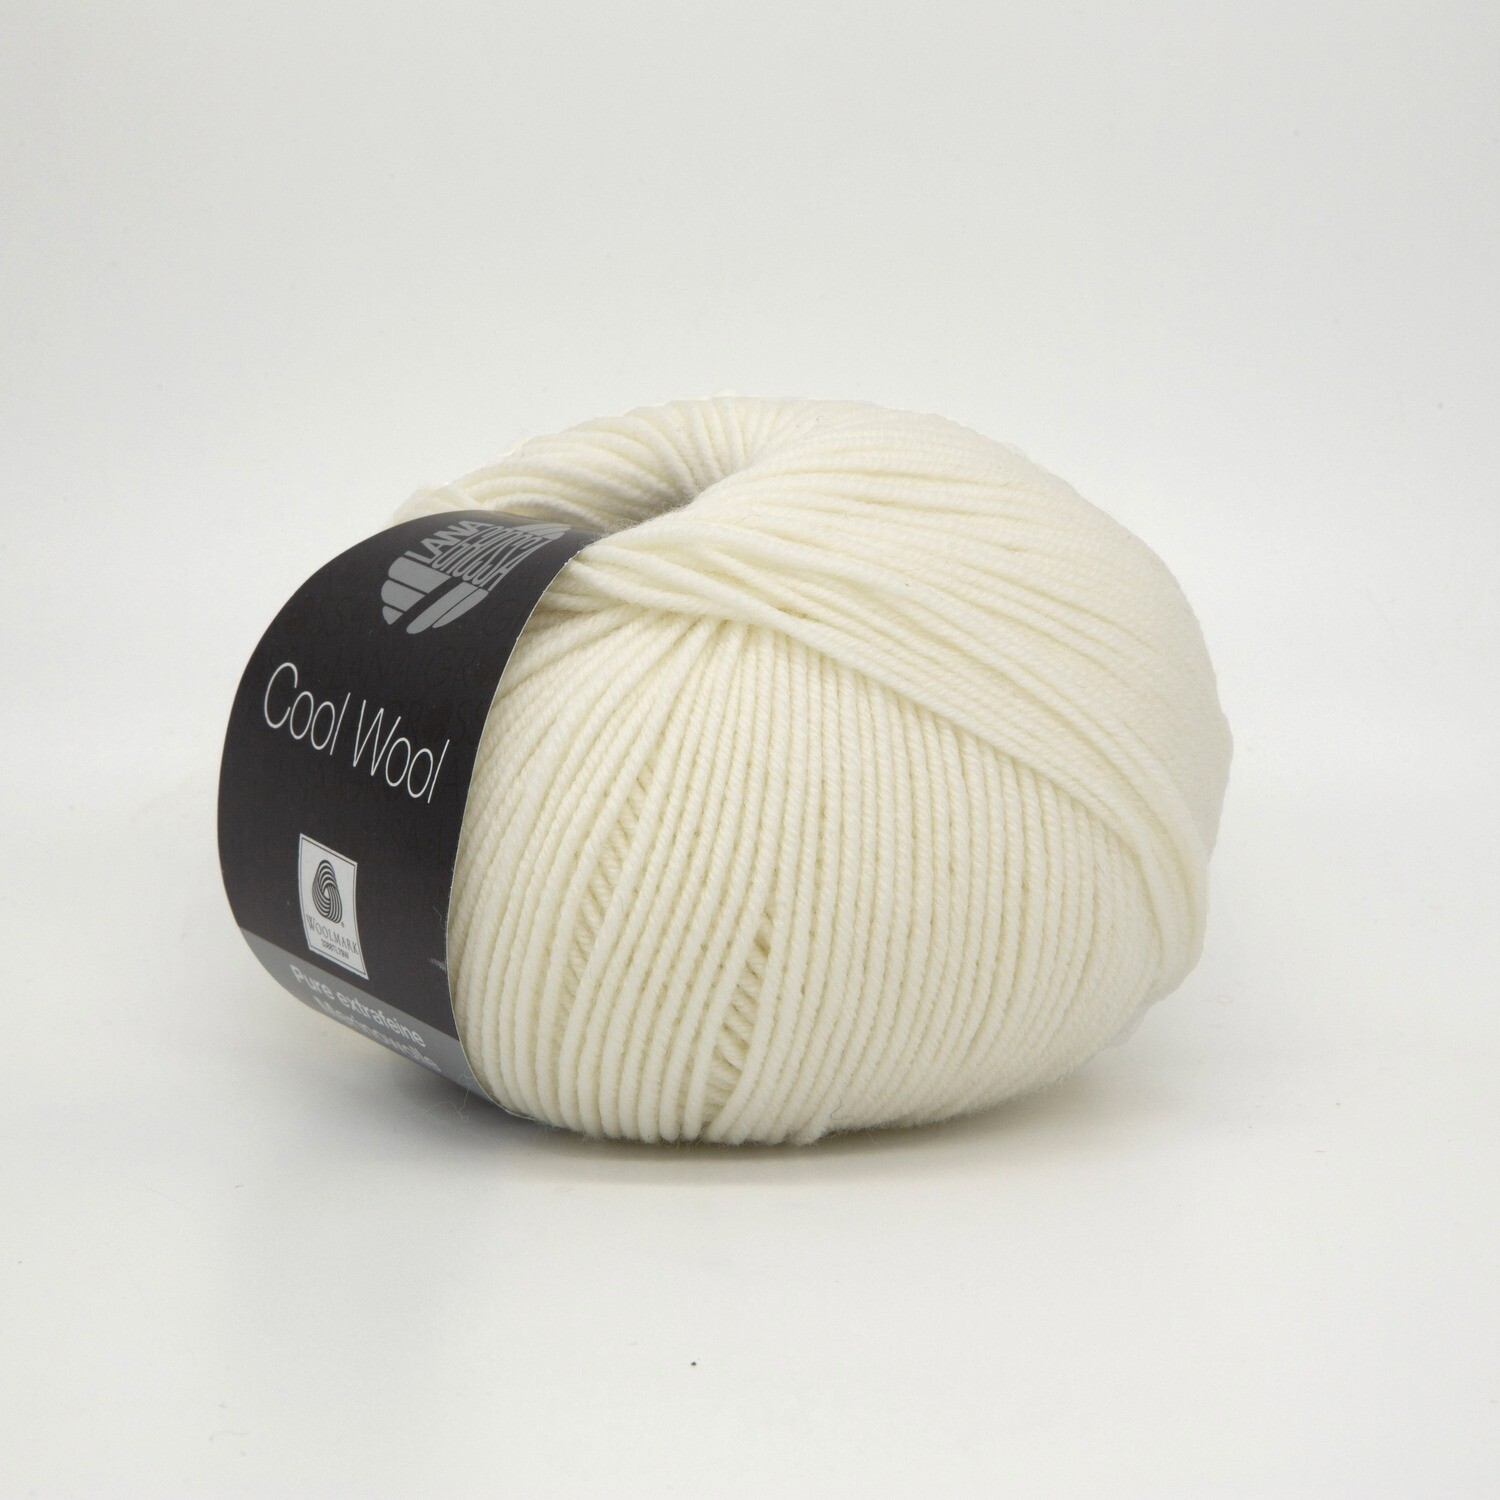 cool wool белый 431